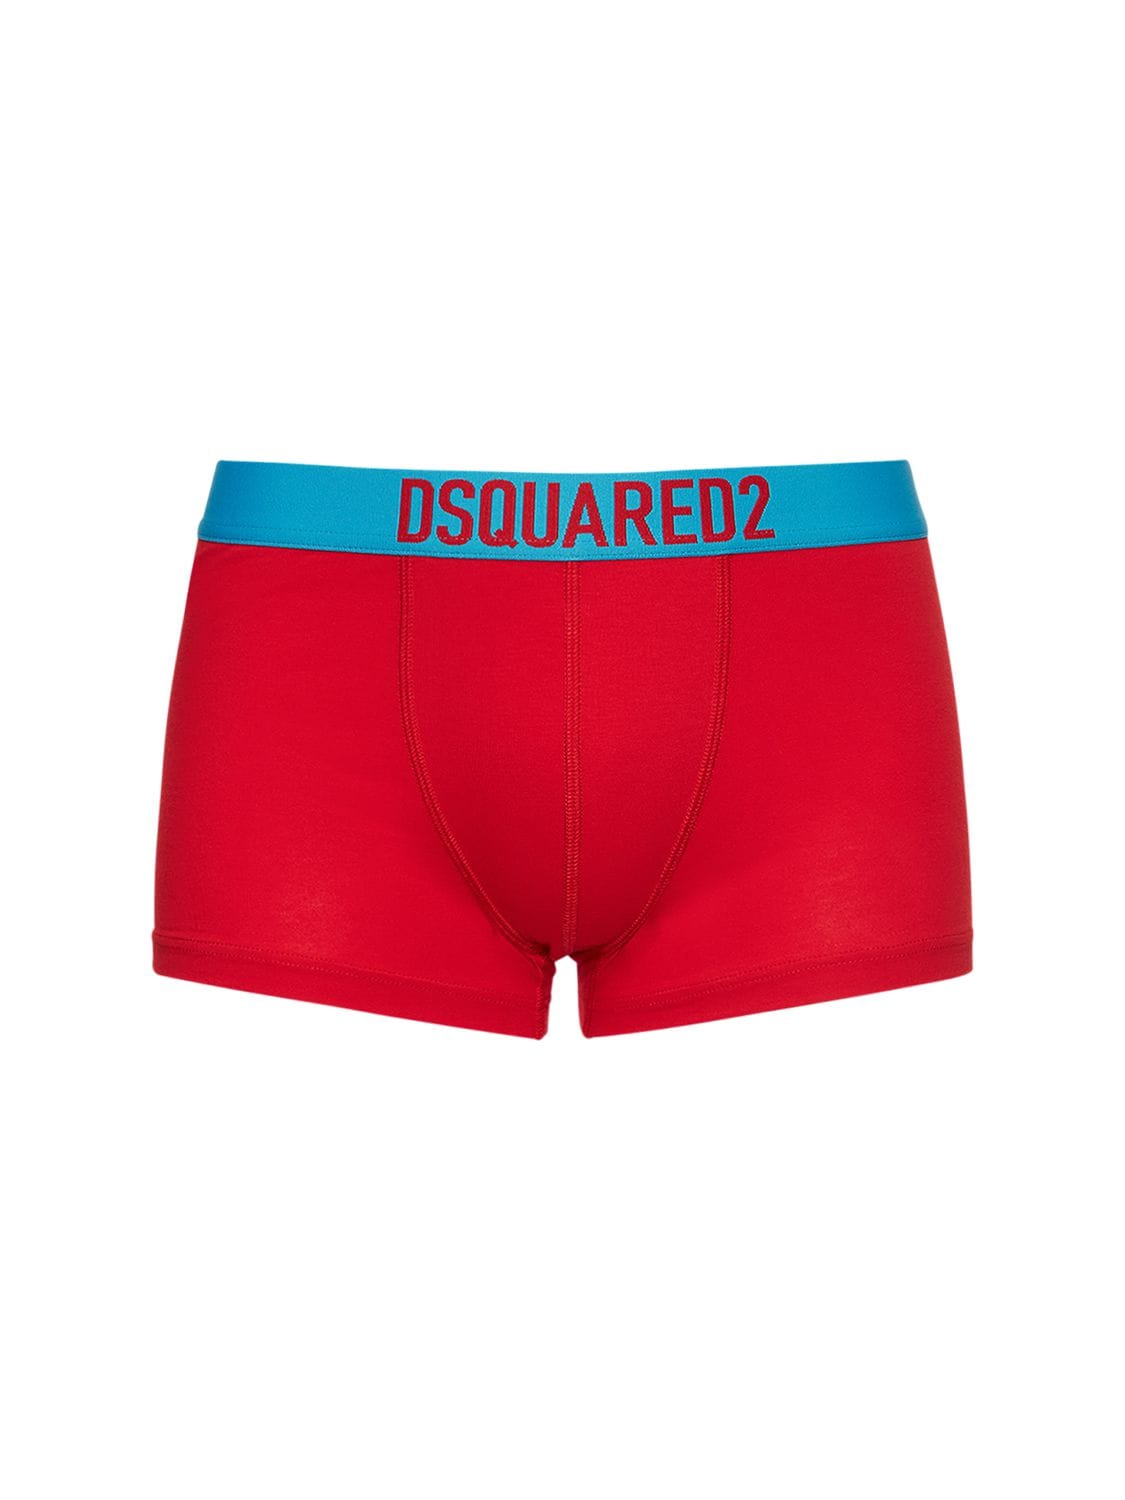 Jersey-unterhose Mit Dsquared-logo - DSQUARED2 UNDERWEAR - Modalova